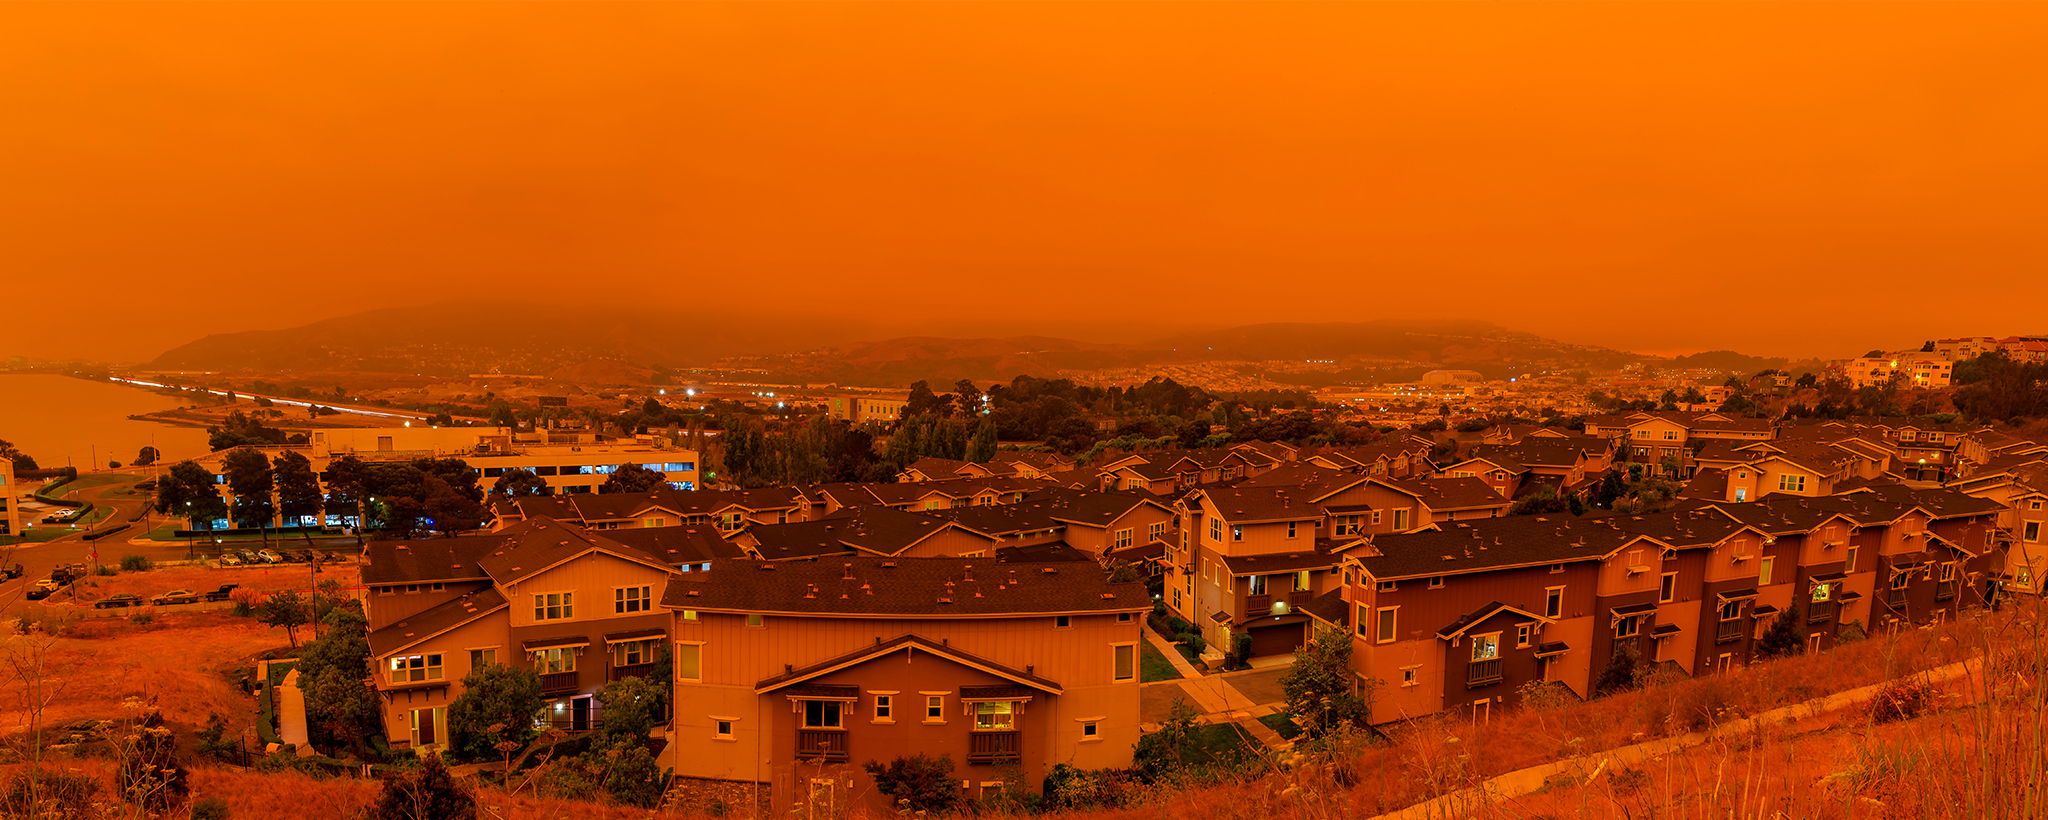 Neblina naranja sobre casas de un incendio forestal cercano.